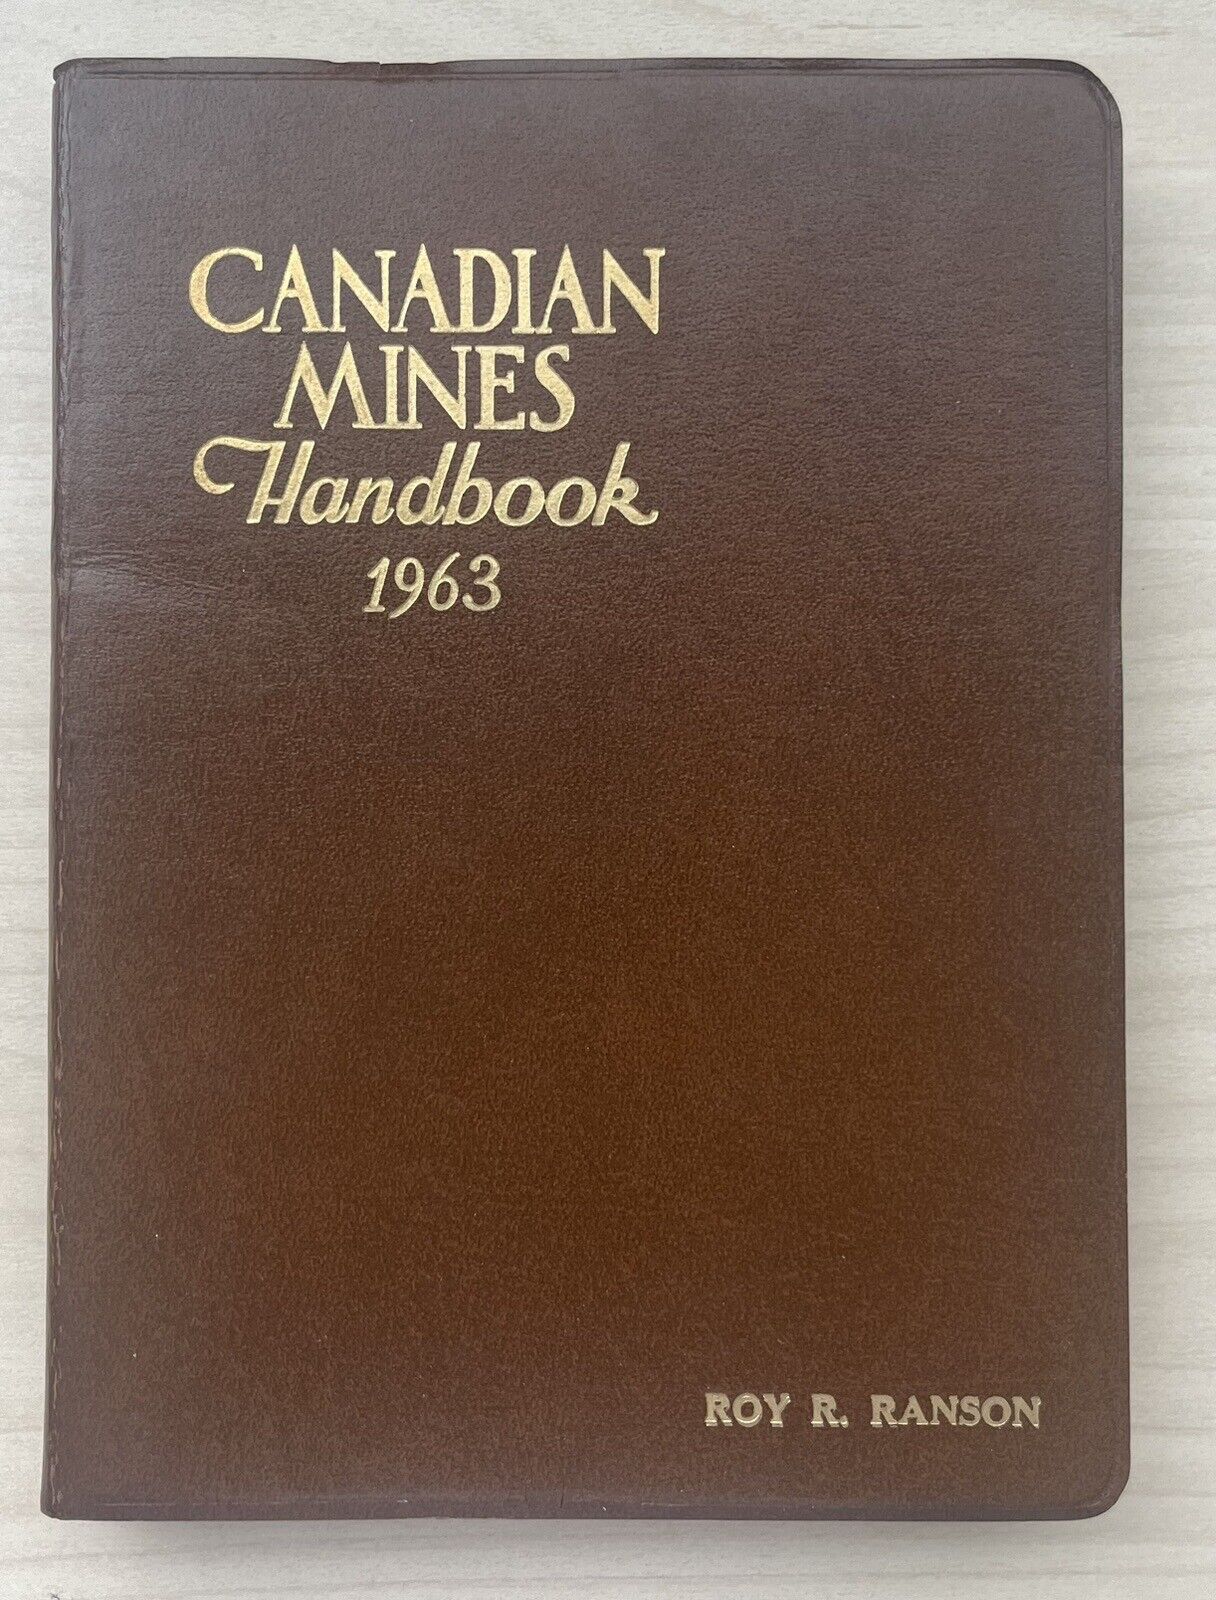 RARE Vintage 1963 Canadian Mines Handbook Roy R. Ranson